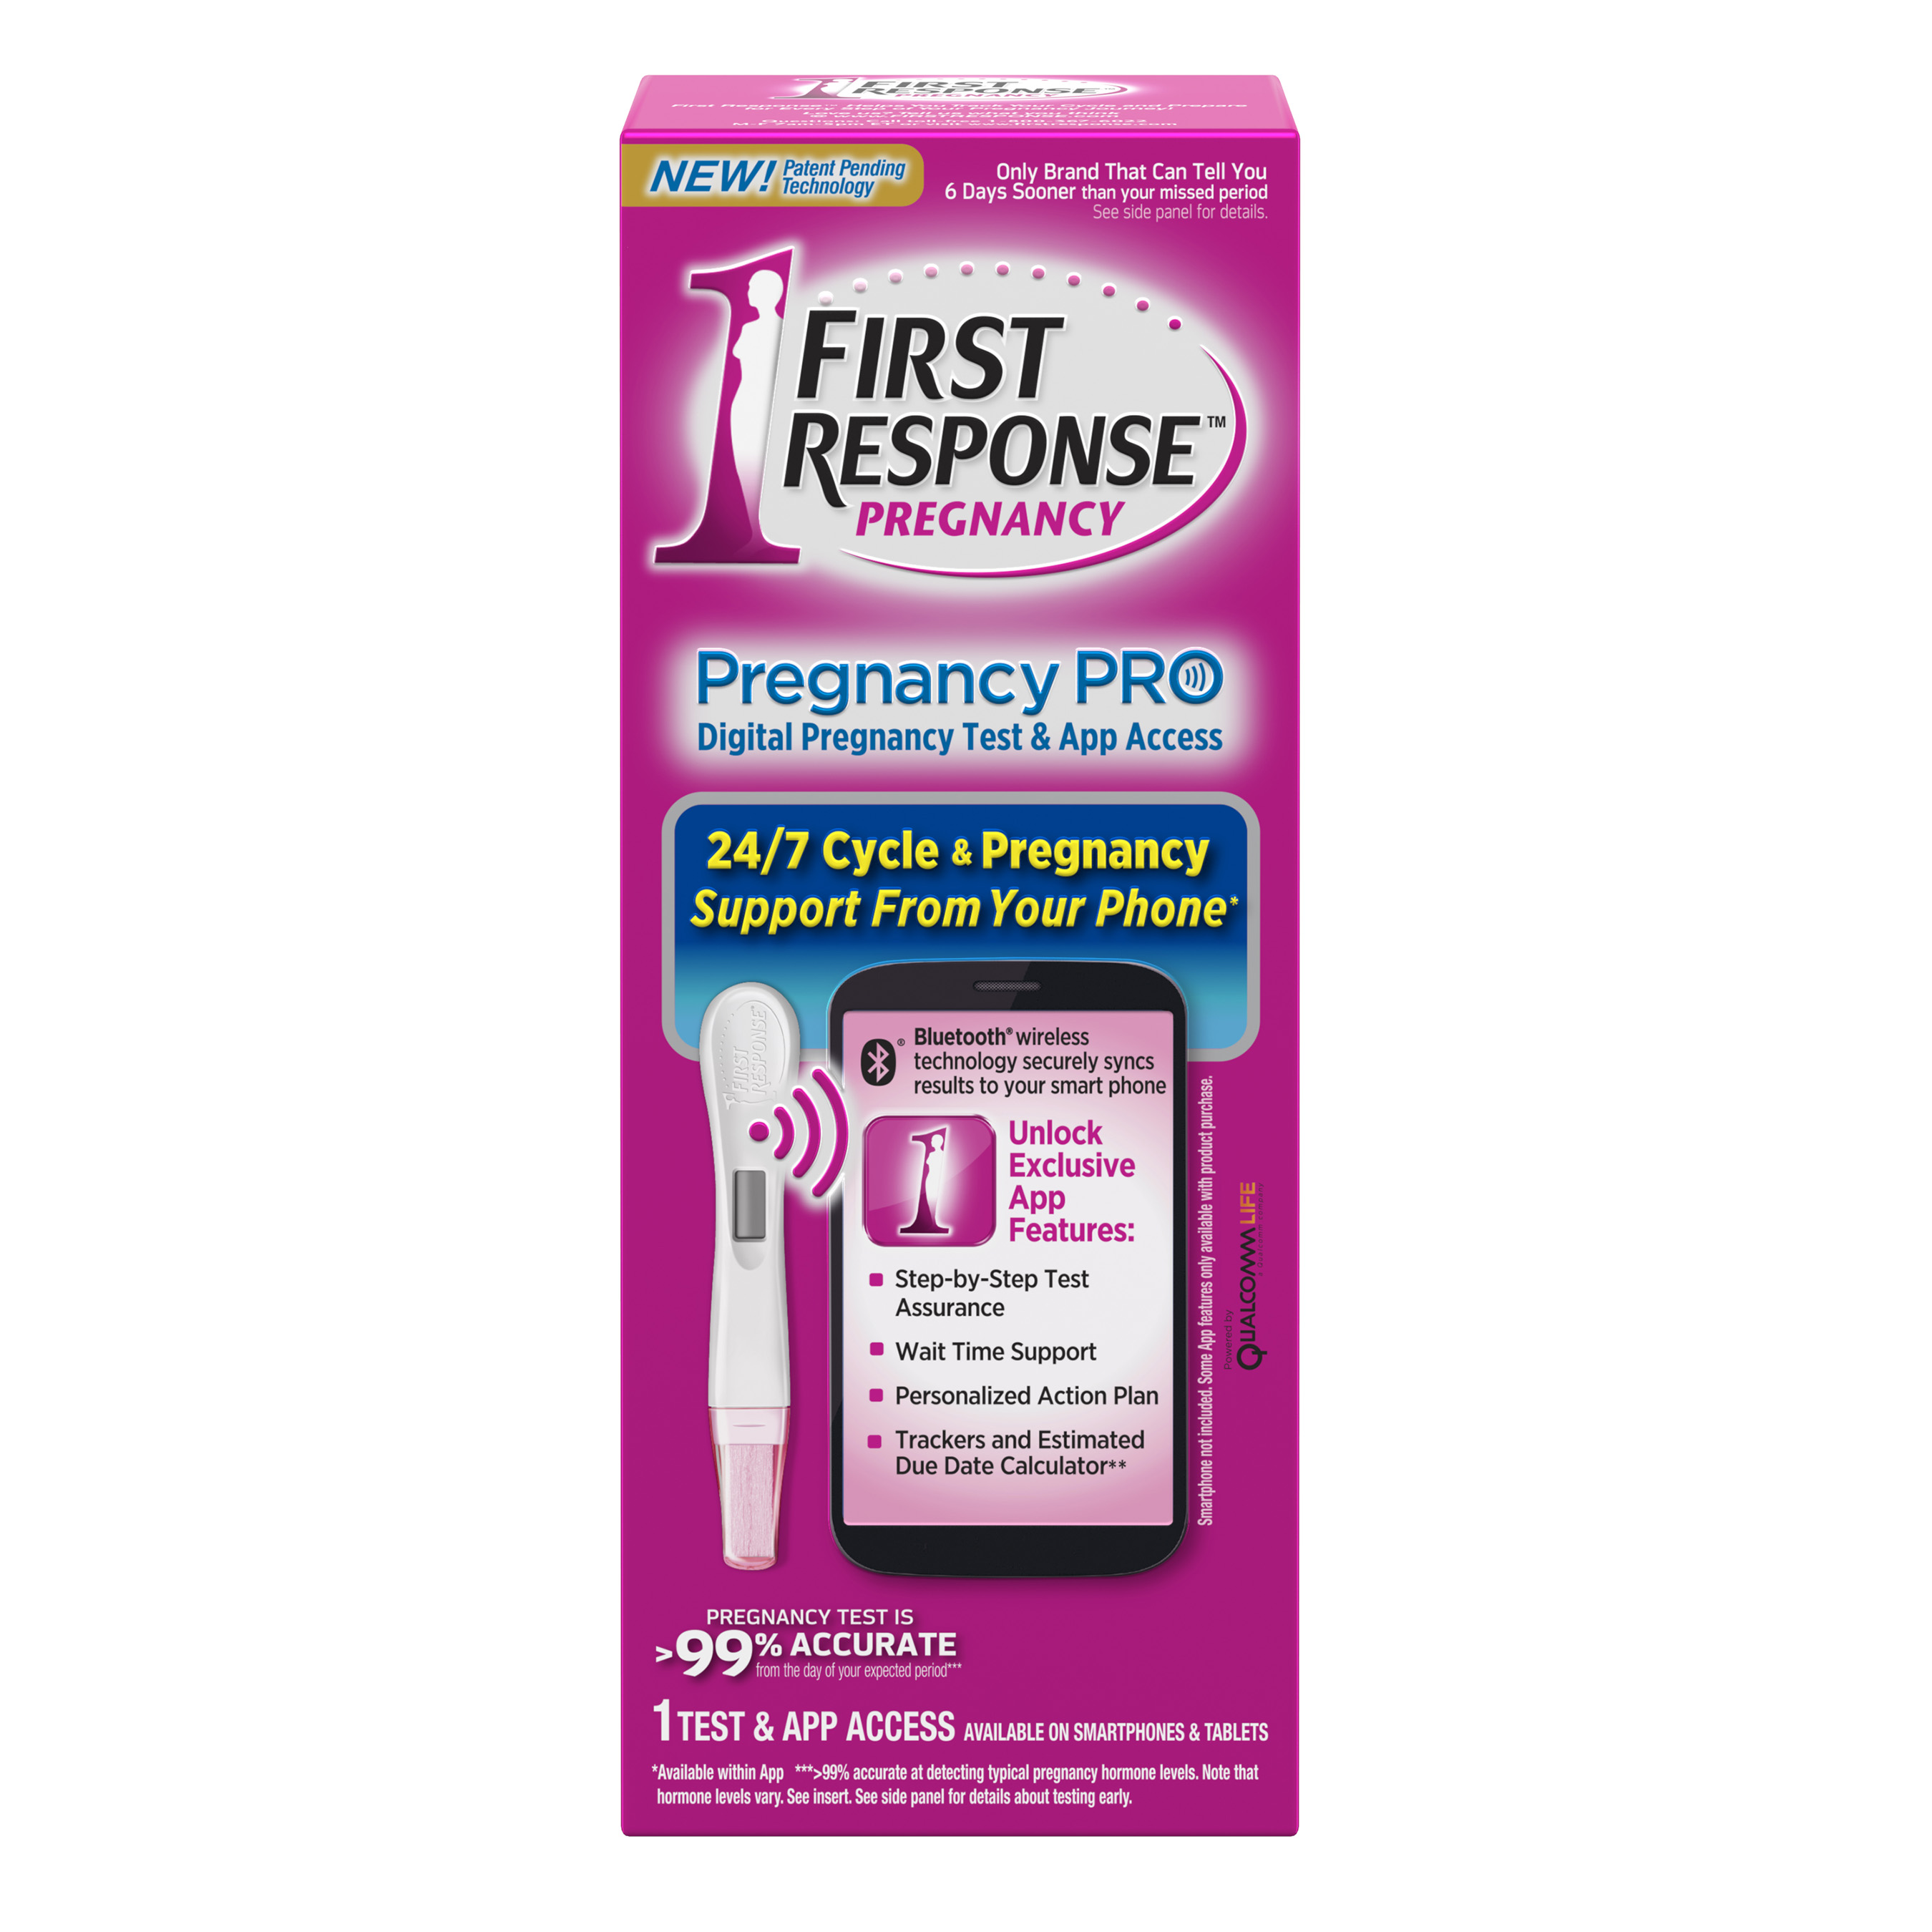 first responsetm pregnancy pro digital pregnancy test and app access 5 HR